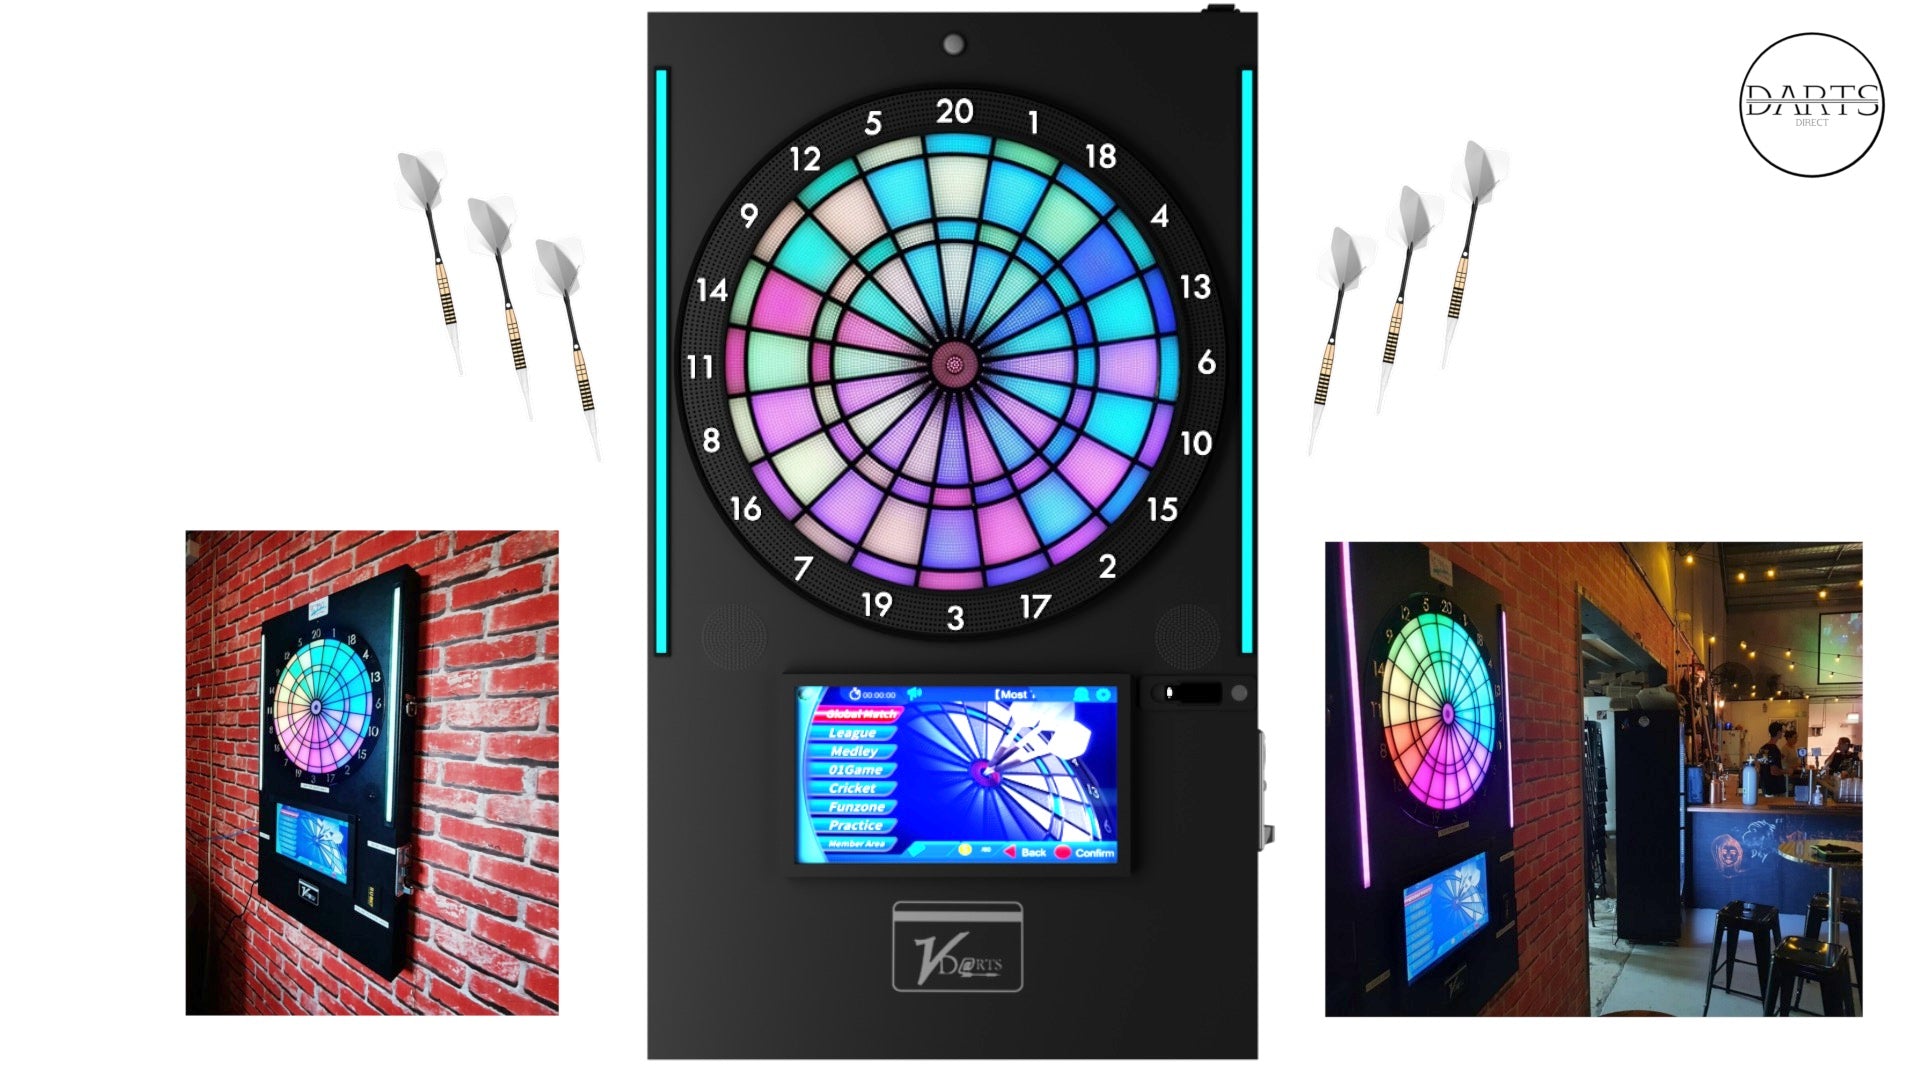 VDarts Mini Pro LED Dart Machine